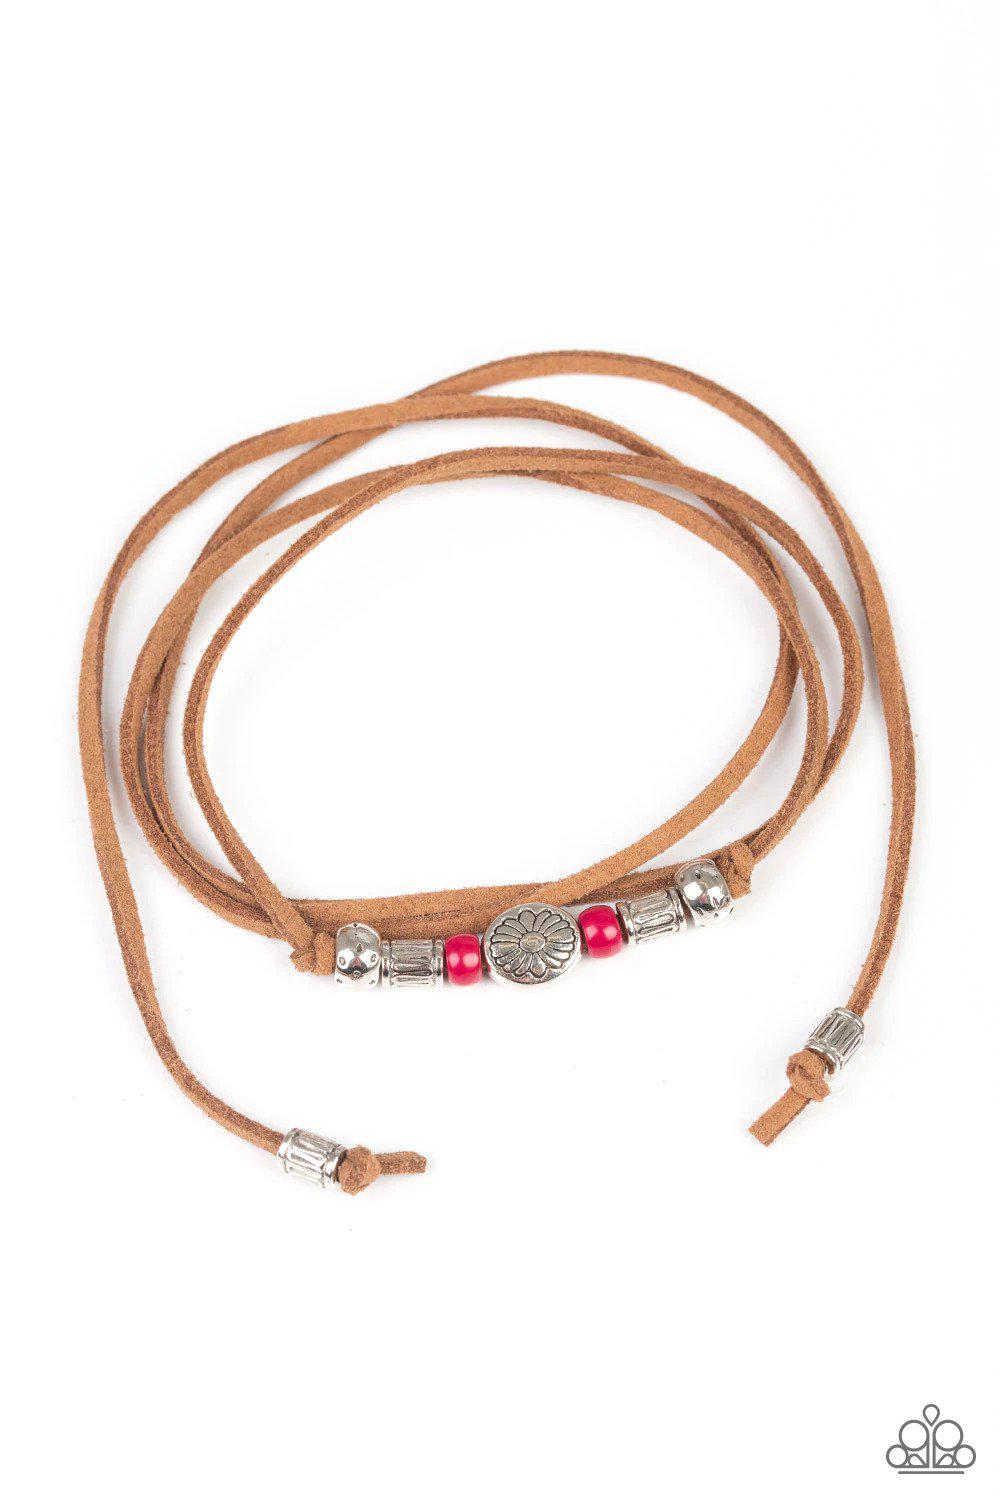 Clear A Path Pink Urban Bracelet - Paparazzi Accessories- lightbox - CarasShop.com - $5 Jewelry by Cara Jewels